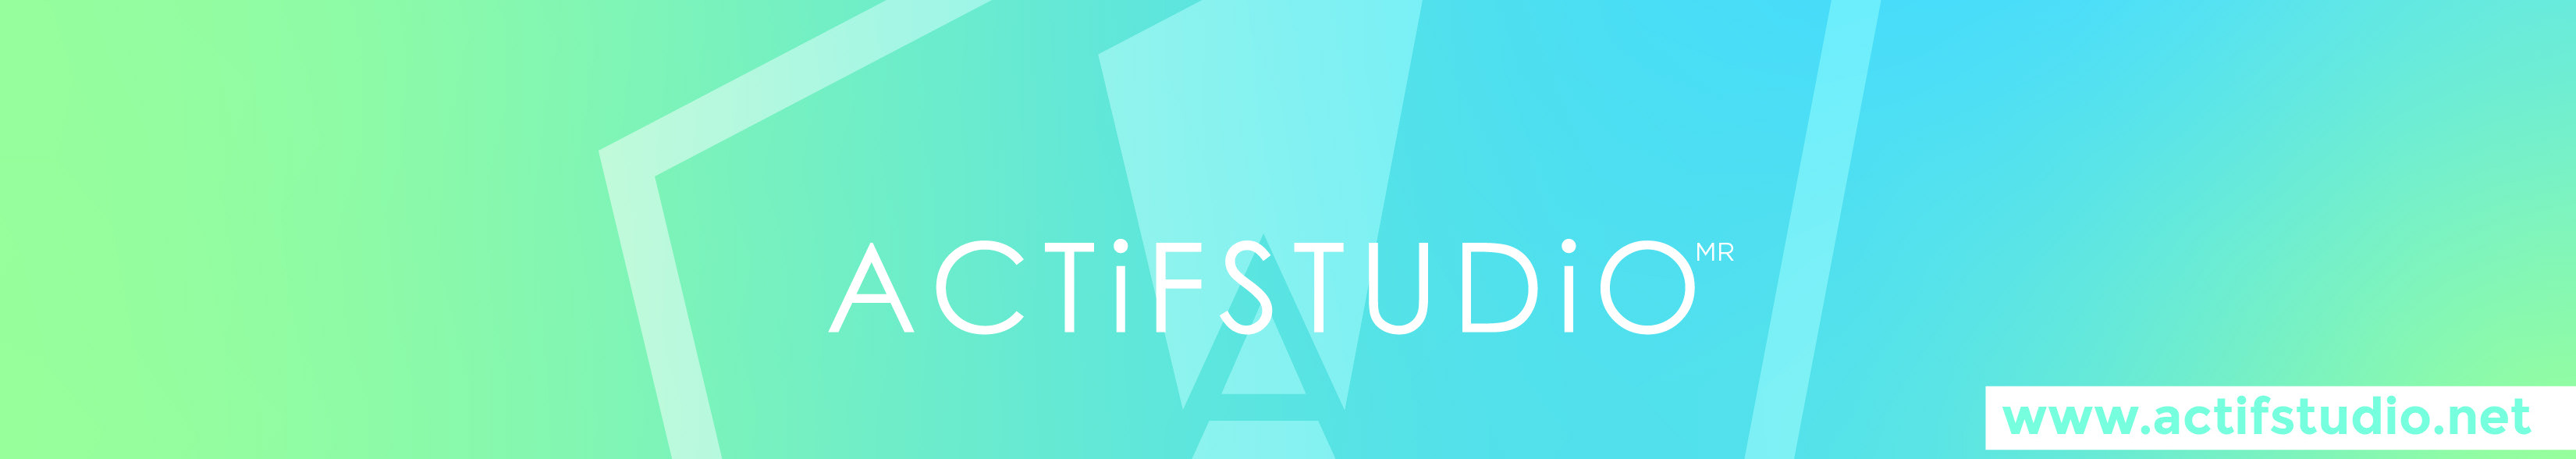 Actif Studio's profile banner